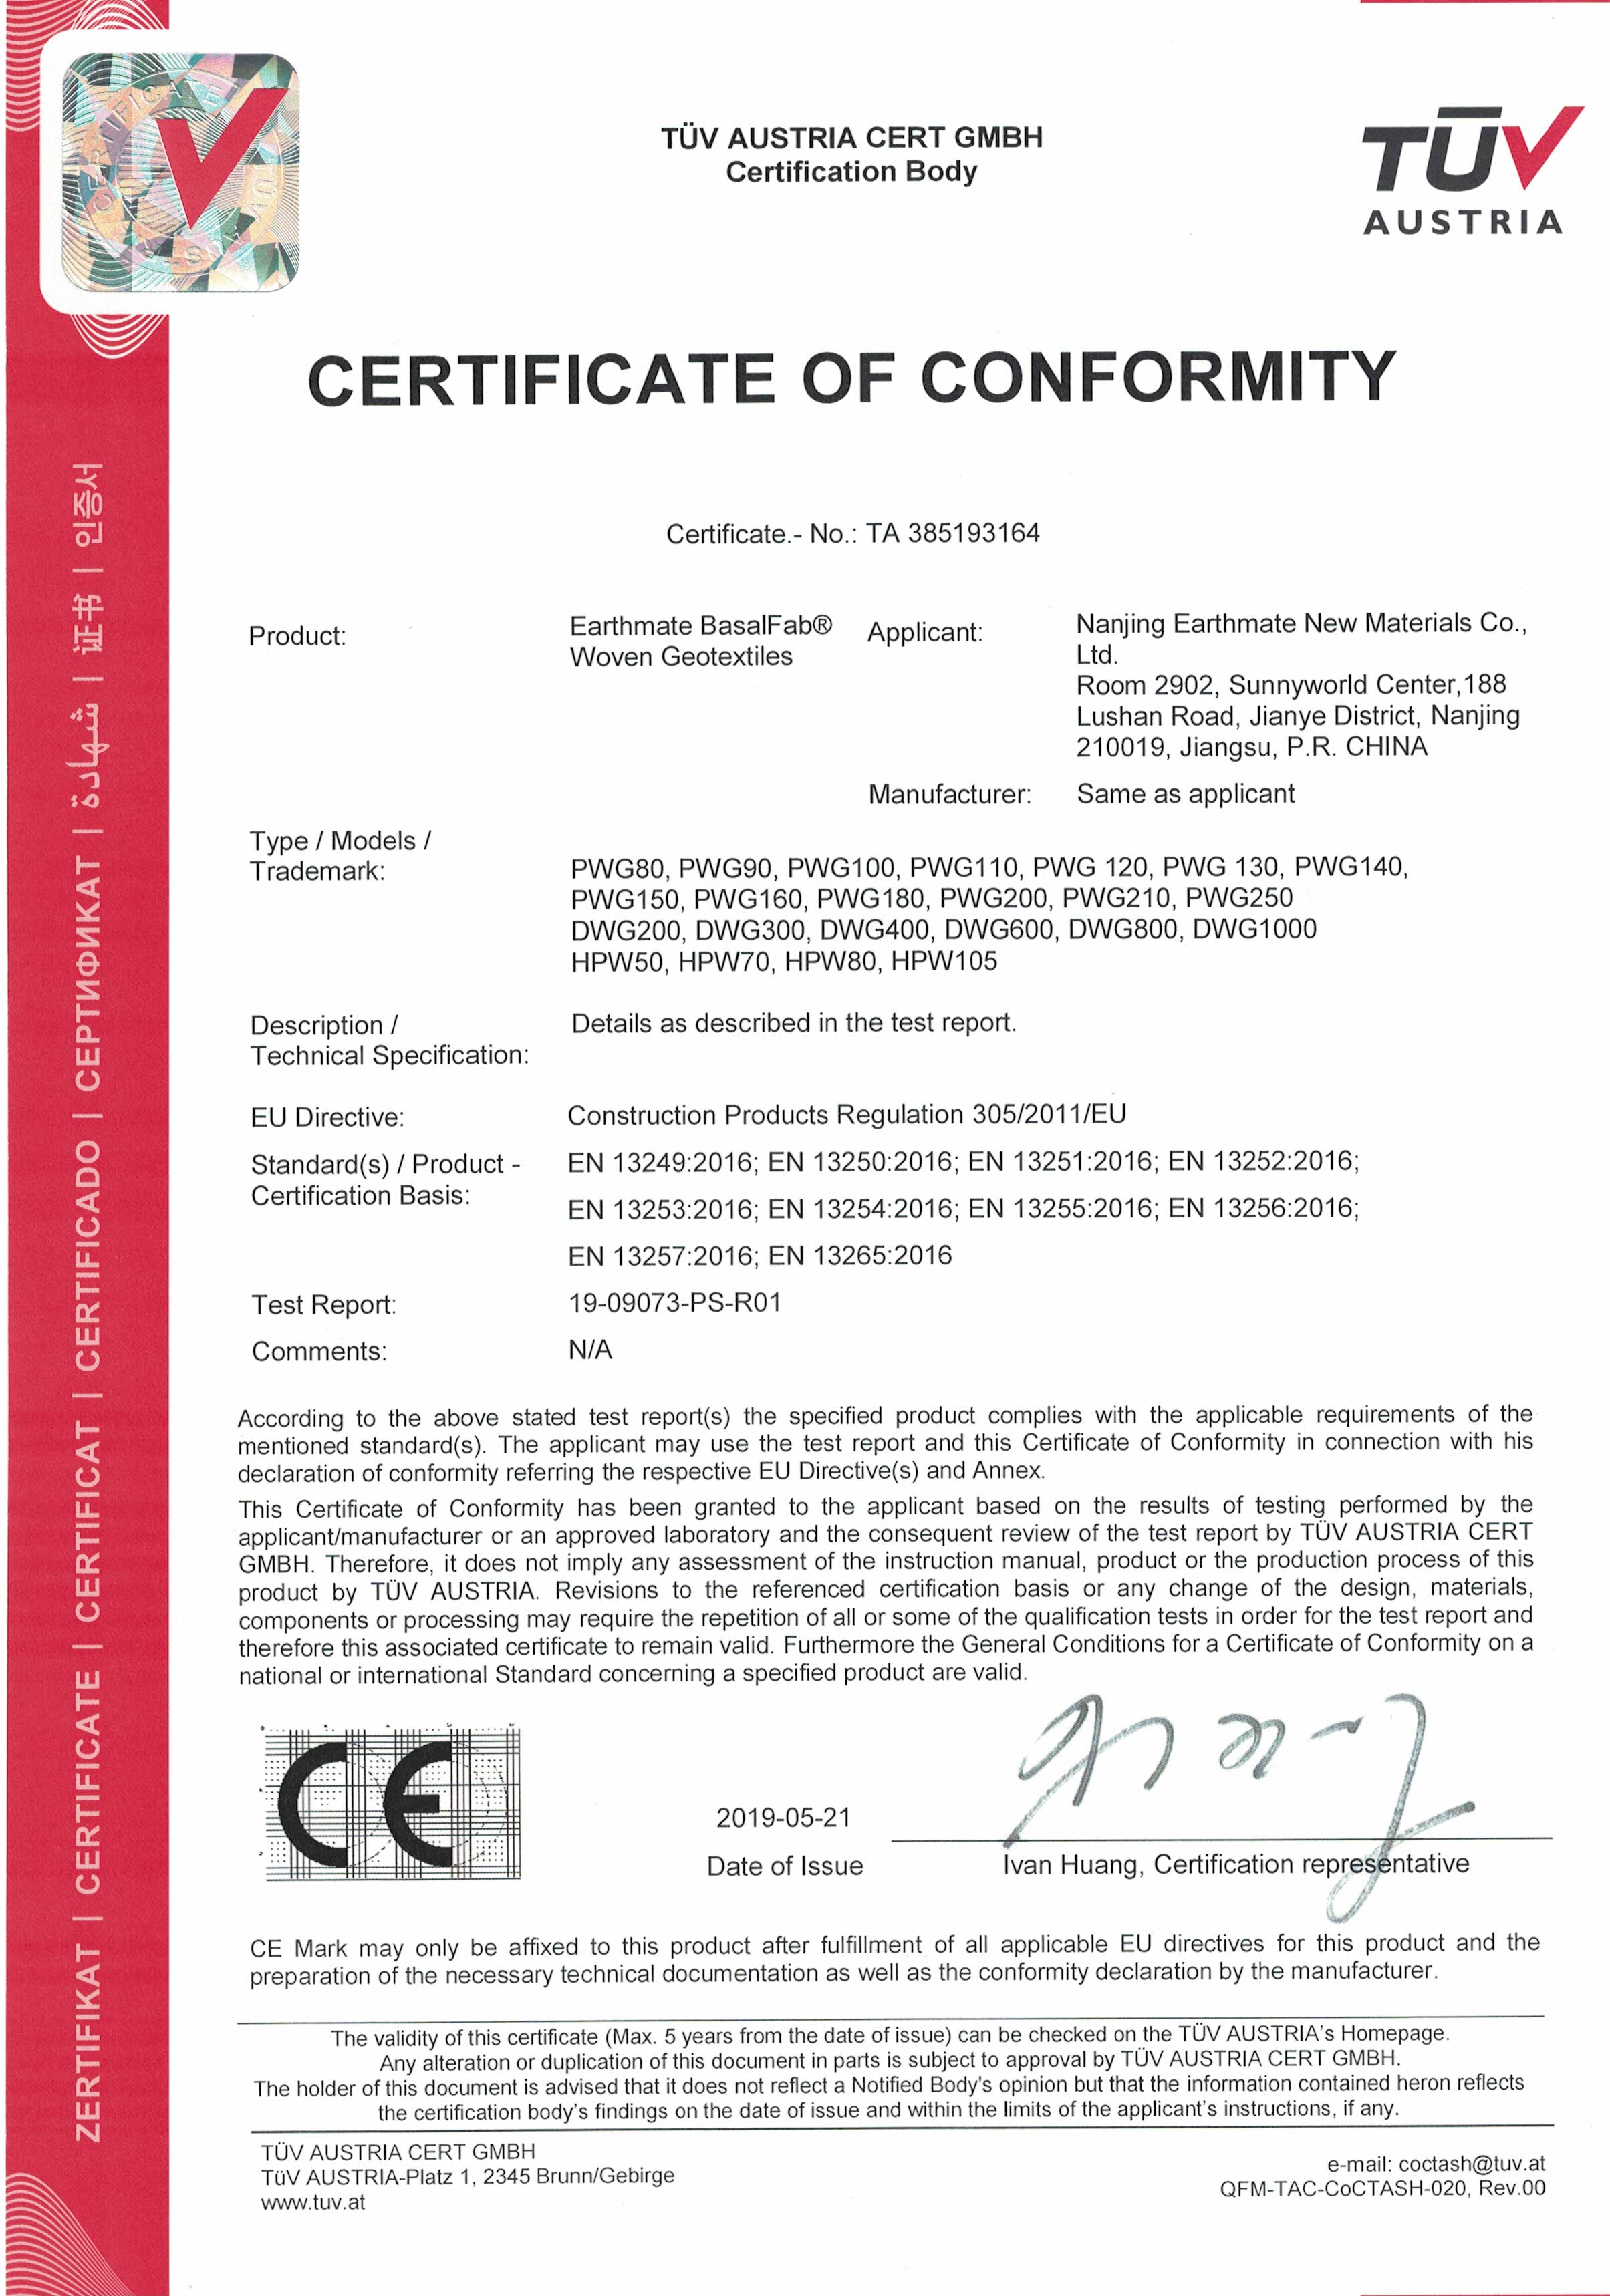 BASALFAB CE Certificate of Conformity | TUV Austria